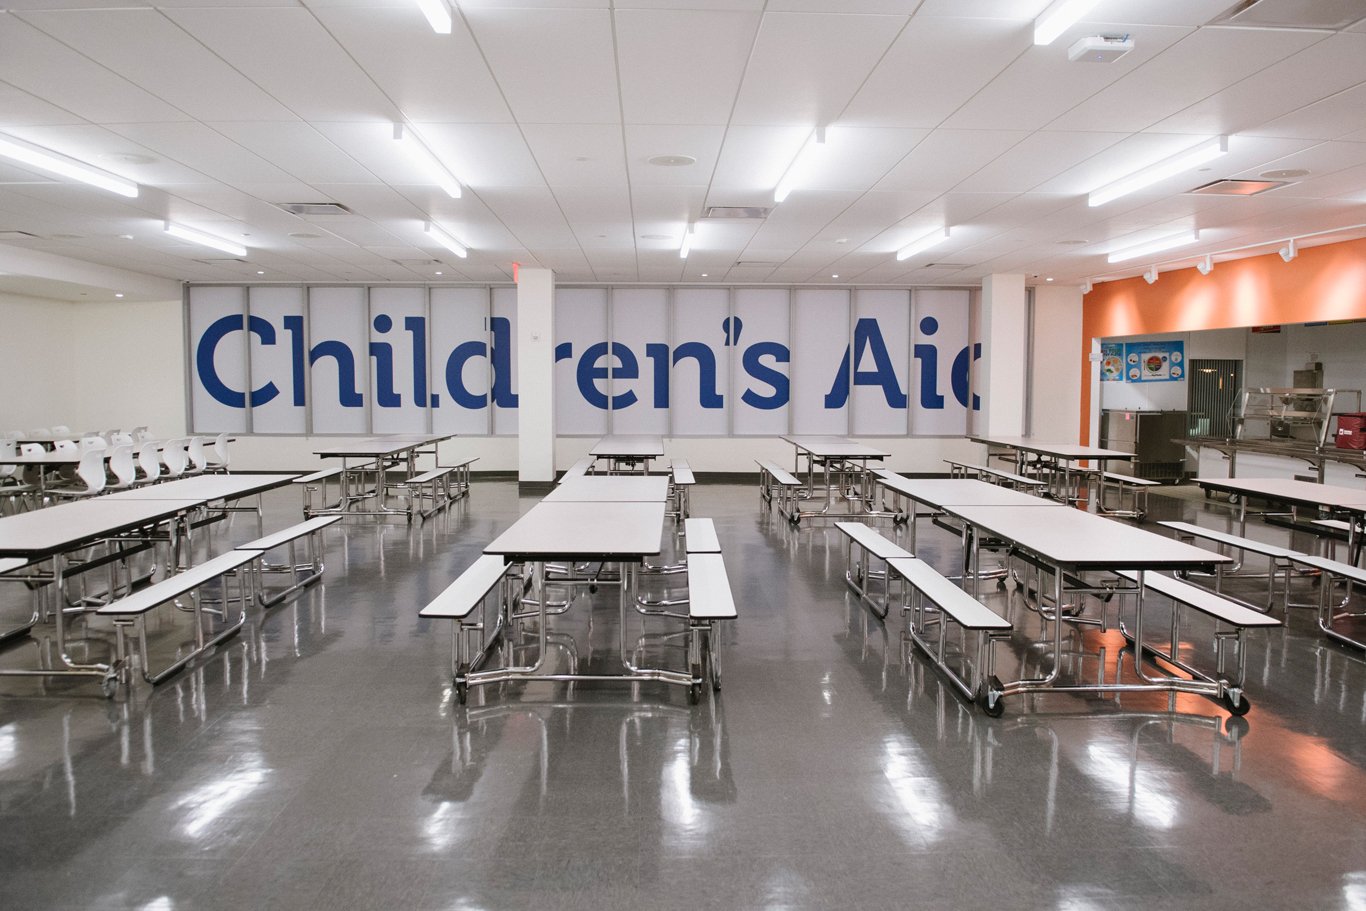 Children's Aid Charter School College Prep Grand Opening - Lunchroom